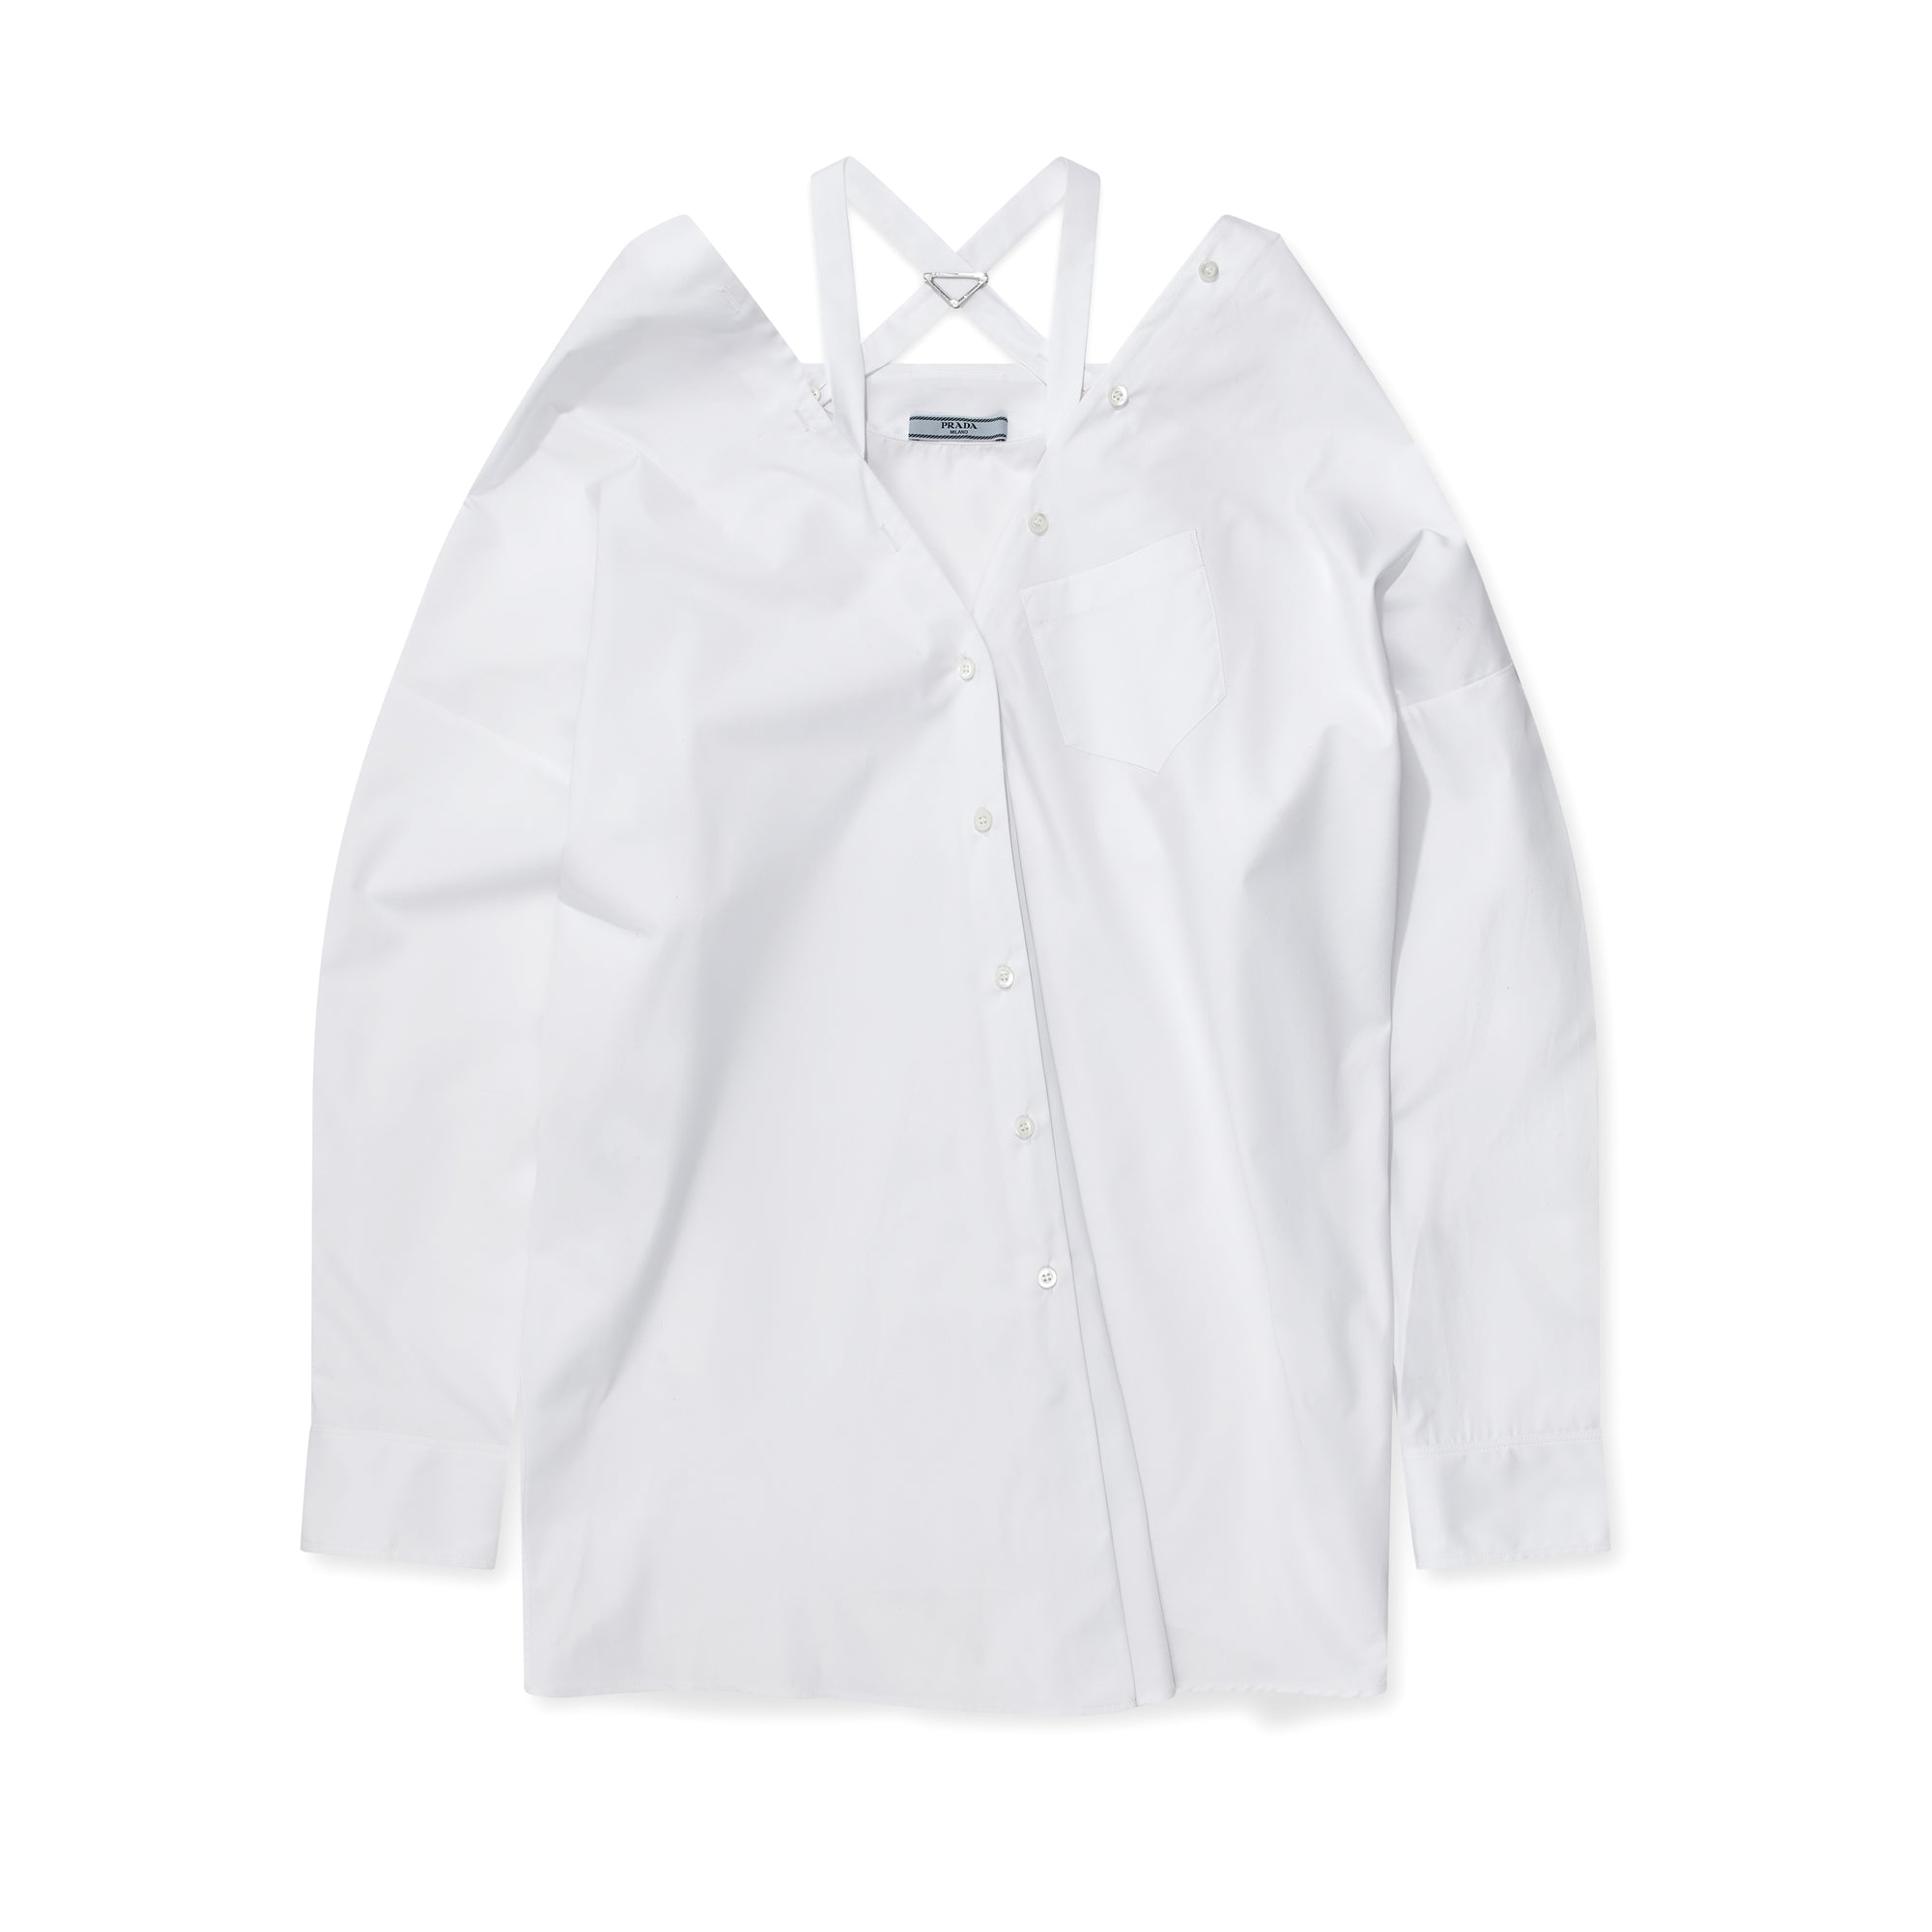 Prada - Women’s Cotton Dress - (White) view 1